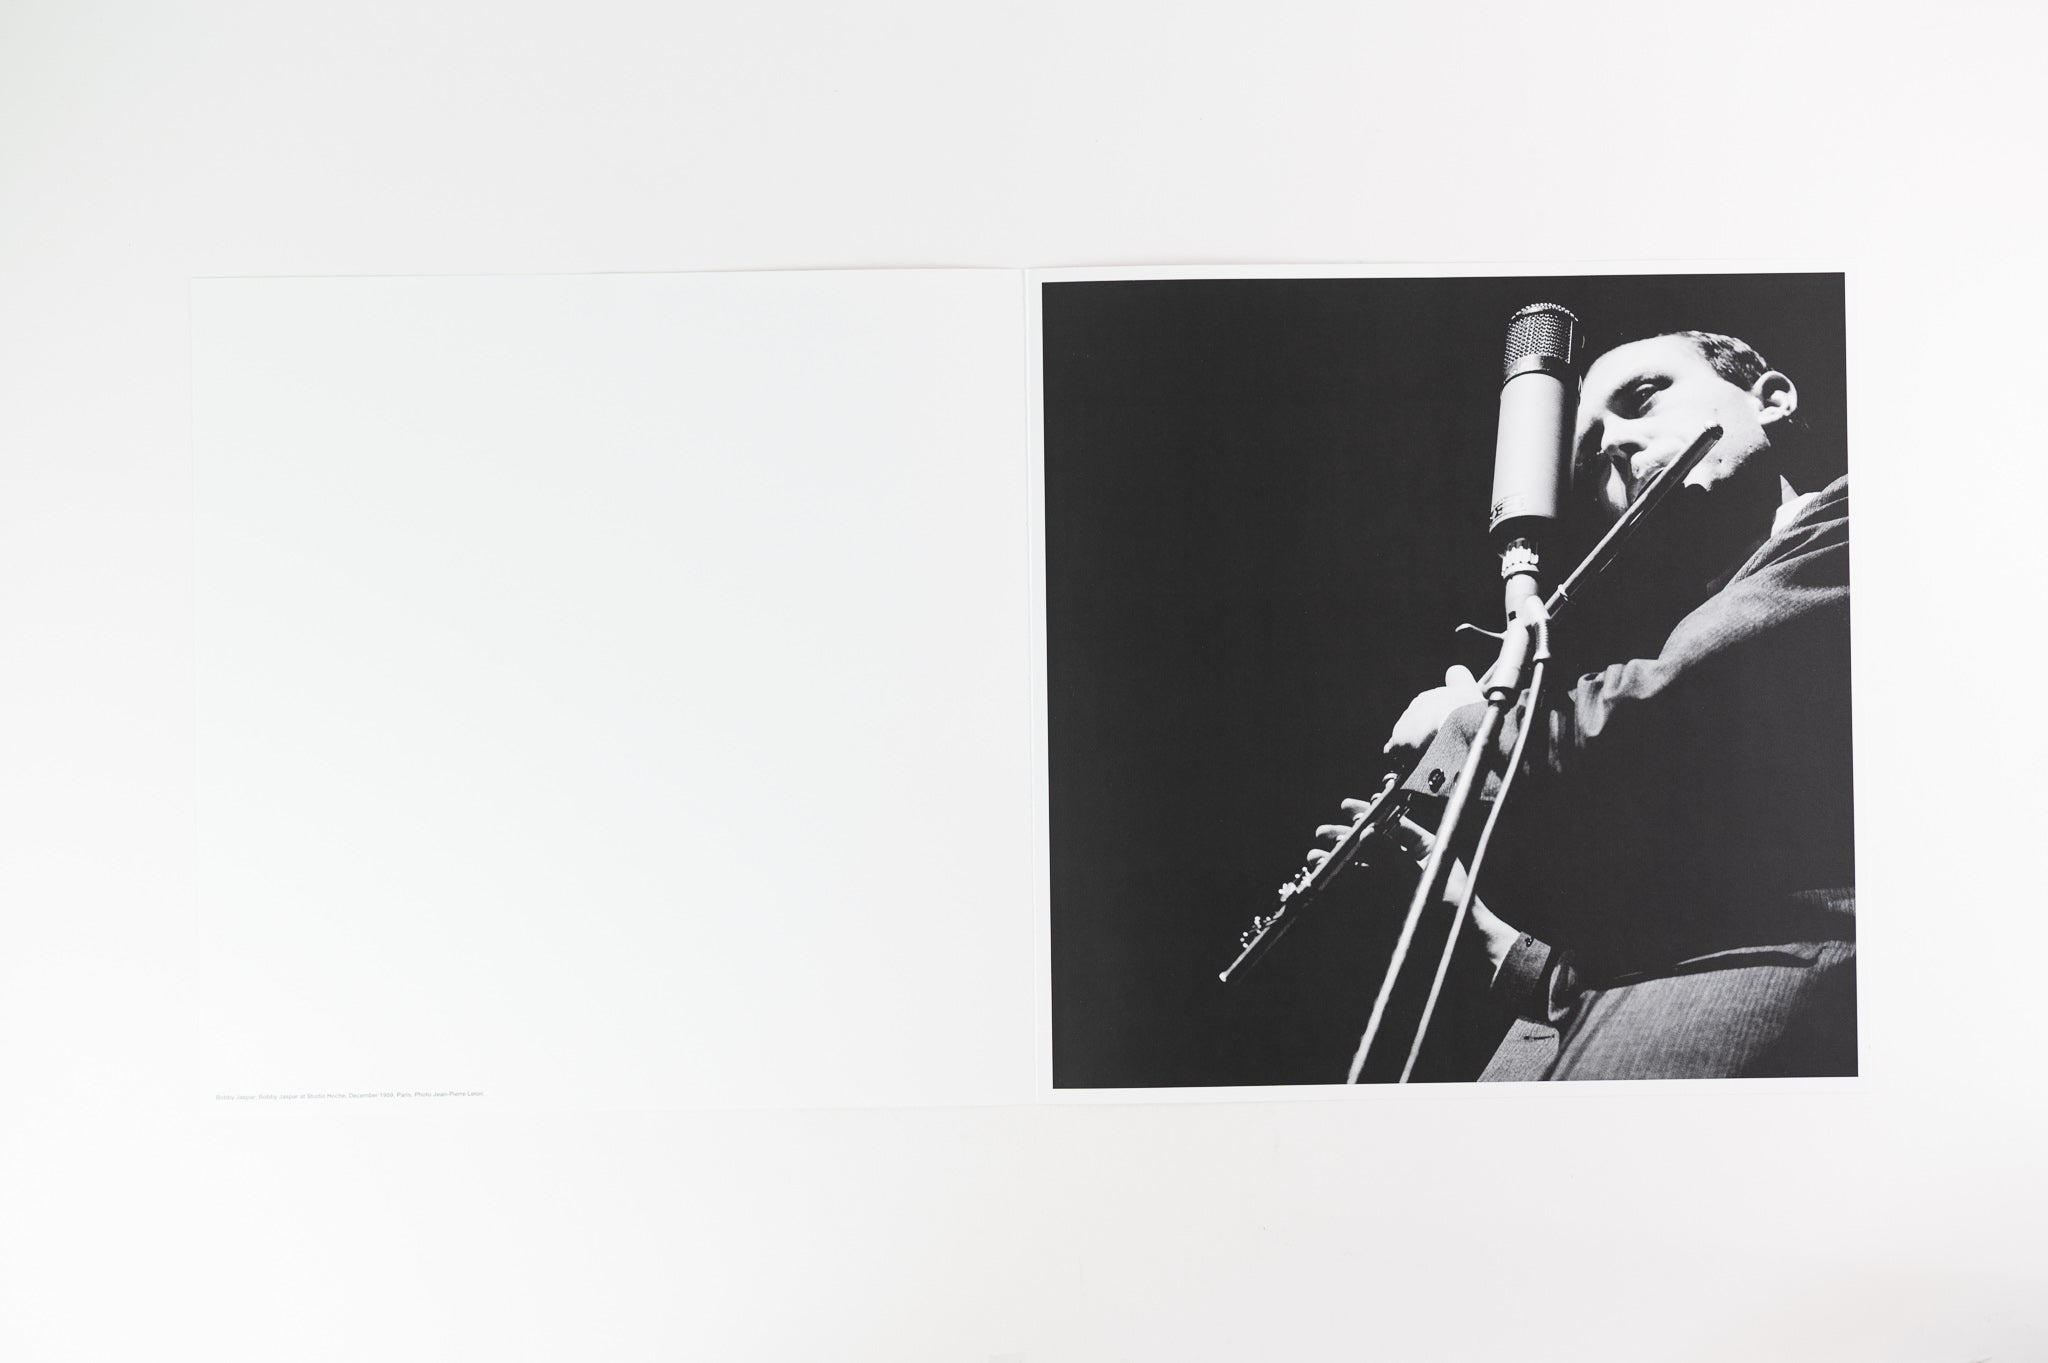 Bobby Jaspar - Bobby Jaspar on Sam Barclay Limited 180 Gram Reissue